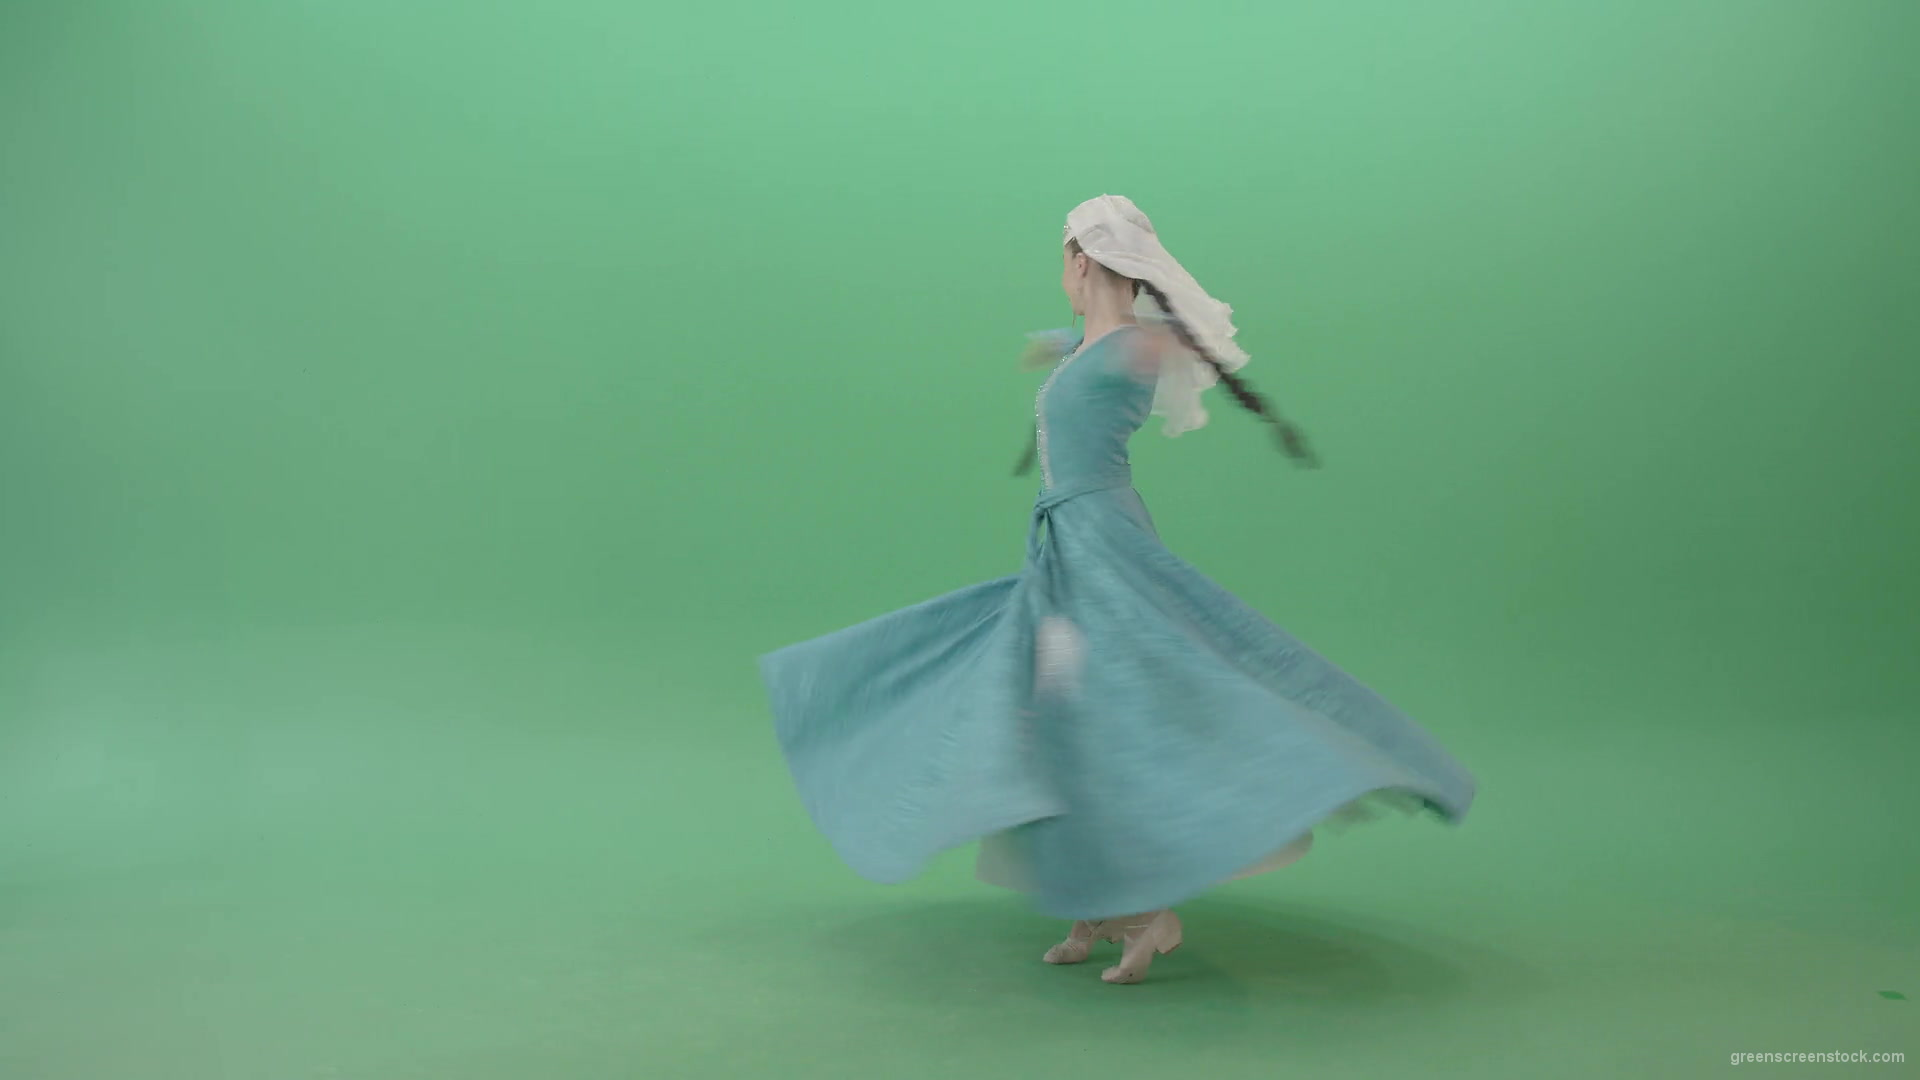 Iberian-Colchis-Woman-spinning-Georgian-Perkhuli-dance-in-blue-dress-isolated-on-Green-Screen-4K-Video-Footage-1920_005 Green Screen Stock